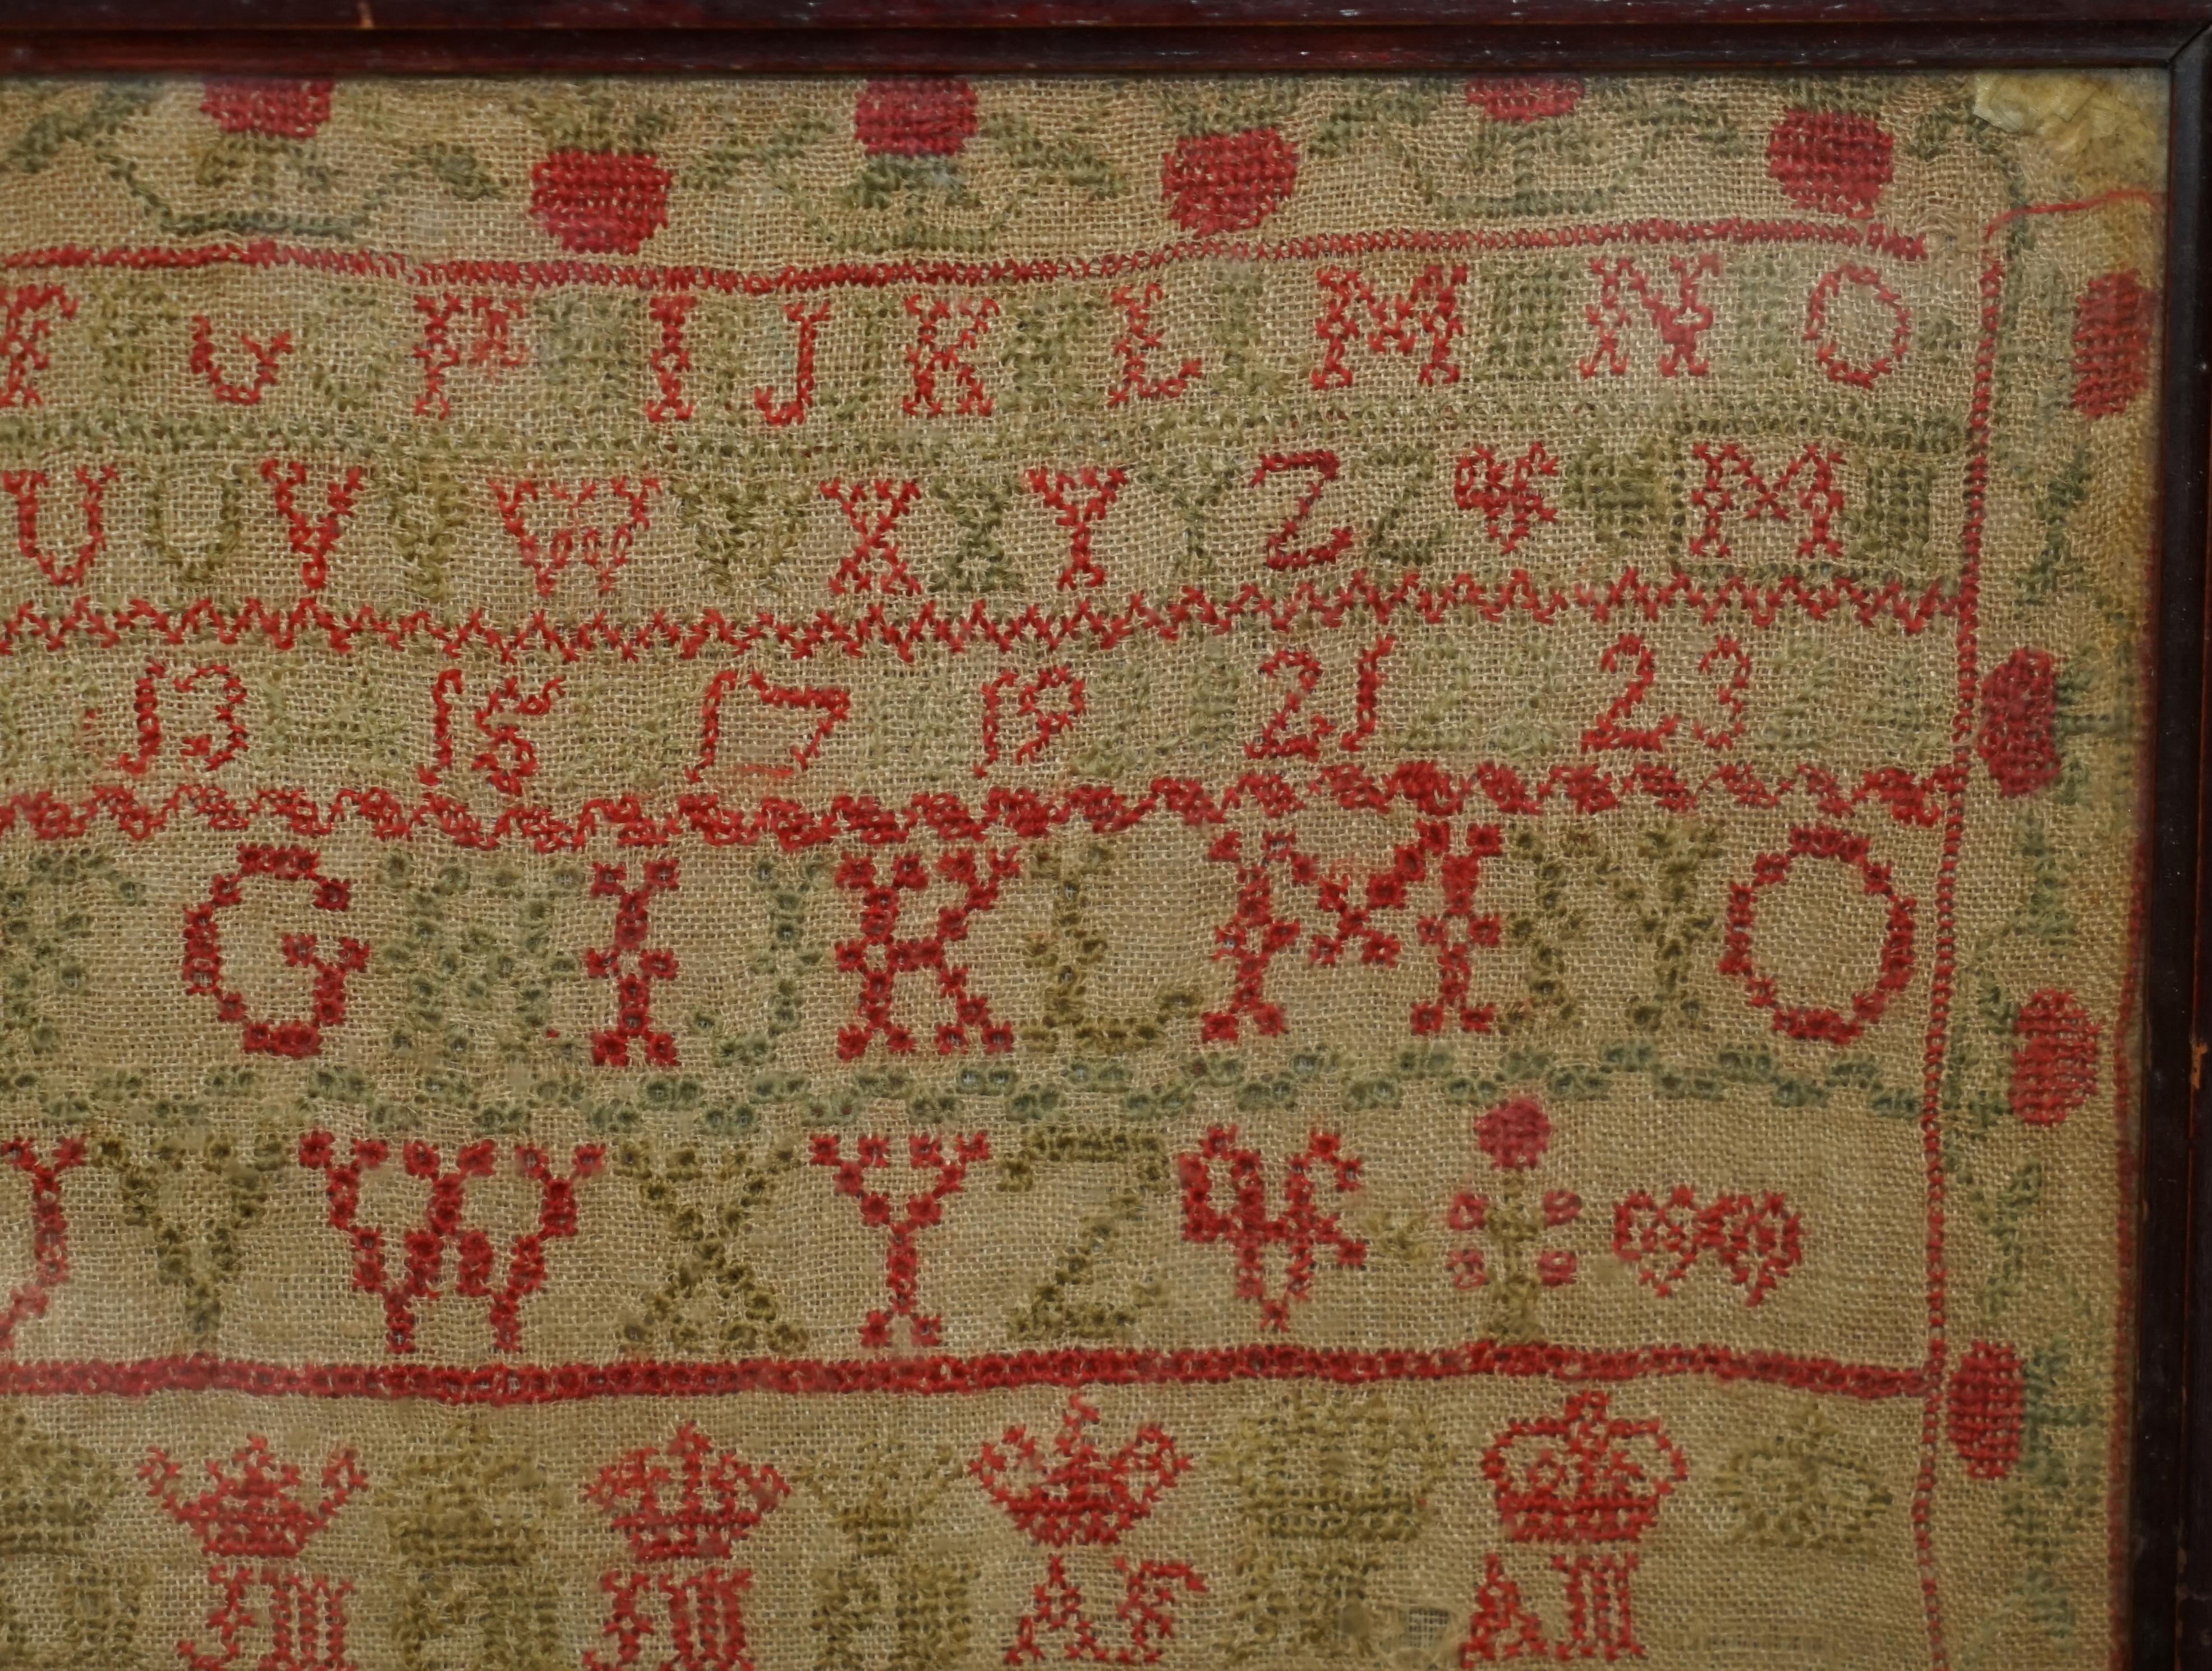 Cotton Antique 1830 Margret McDonald of Scotland Age 10 William IV Needlework Sampler For Sale